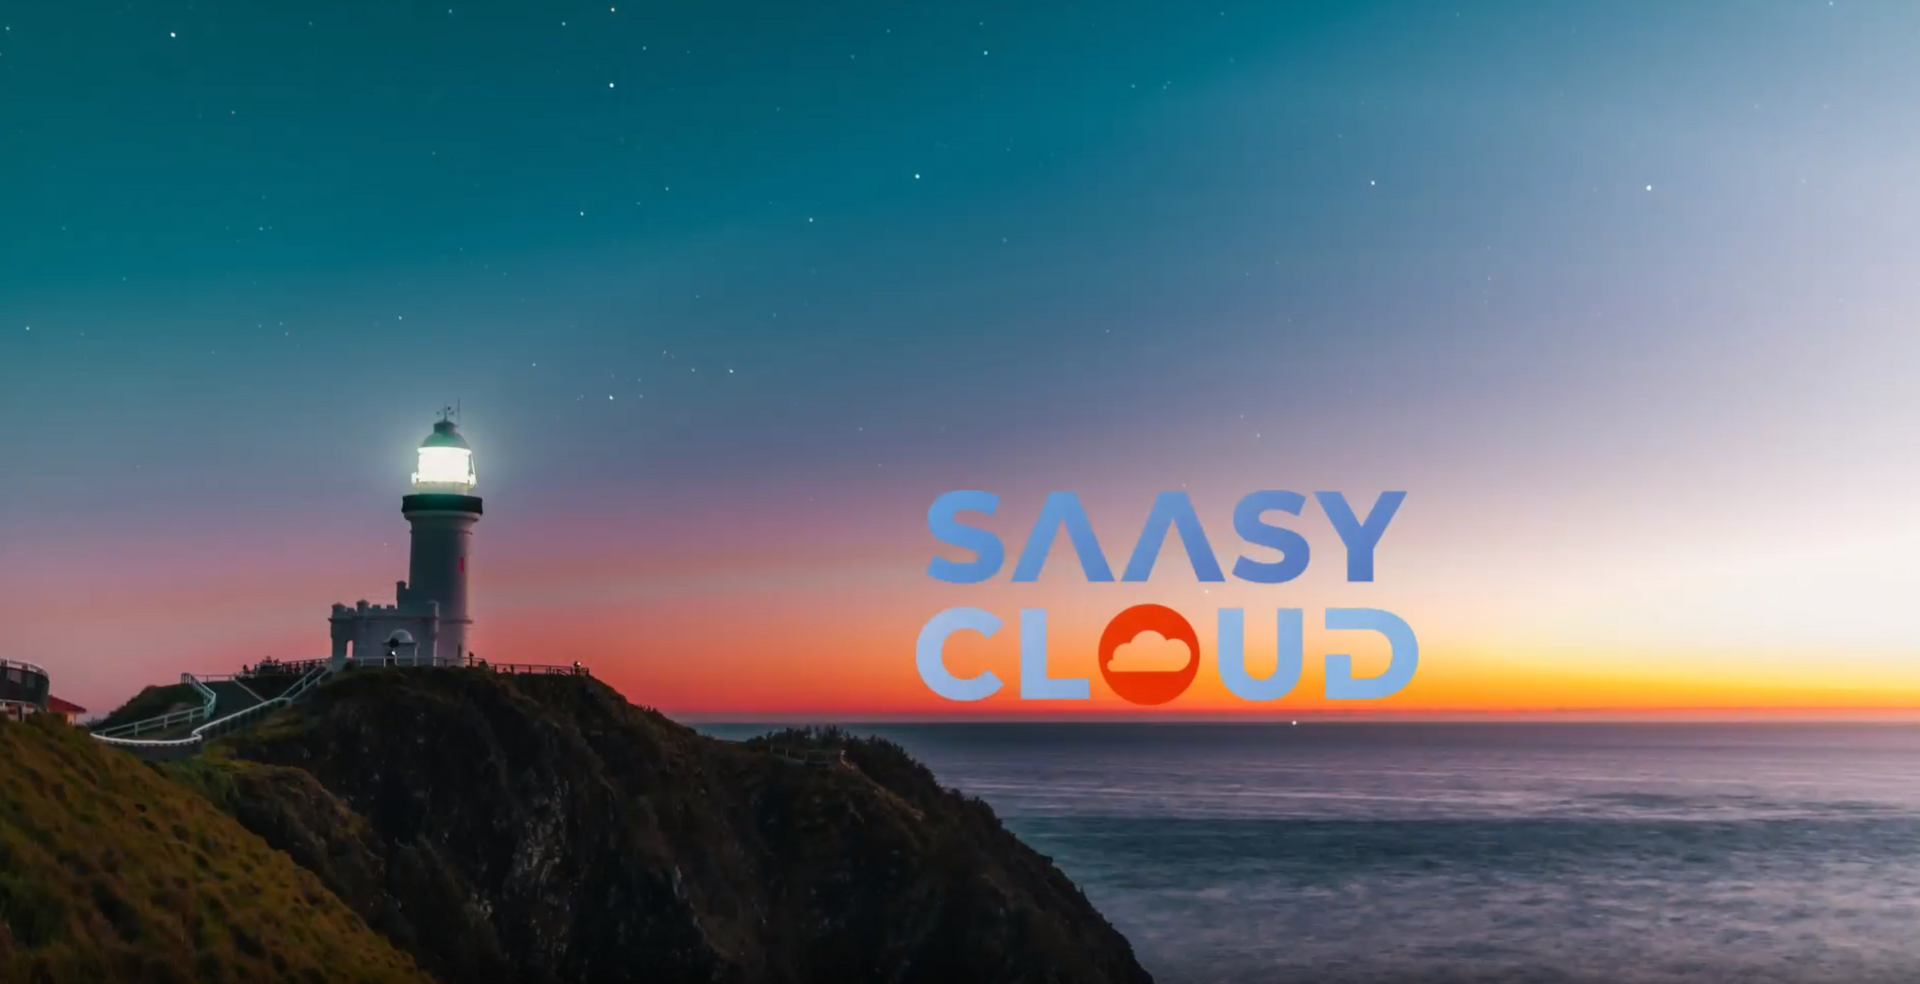 law firm website partner saasy cloud